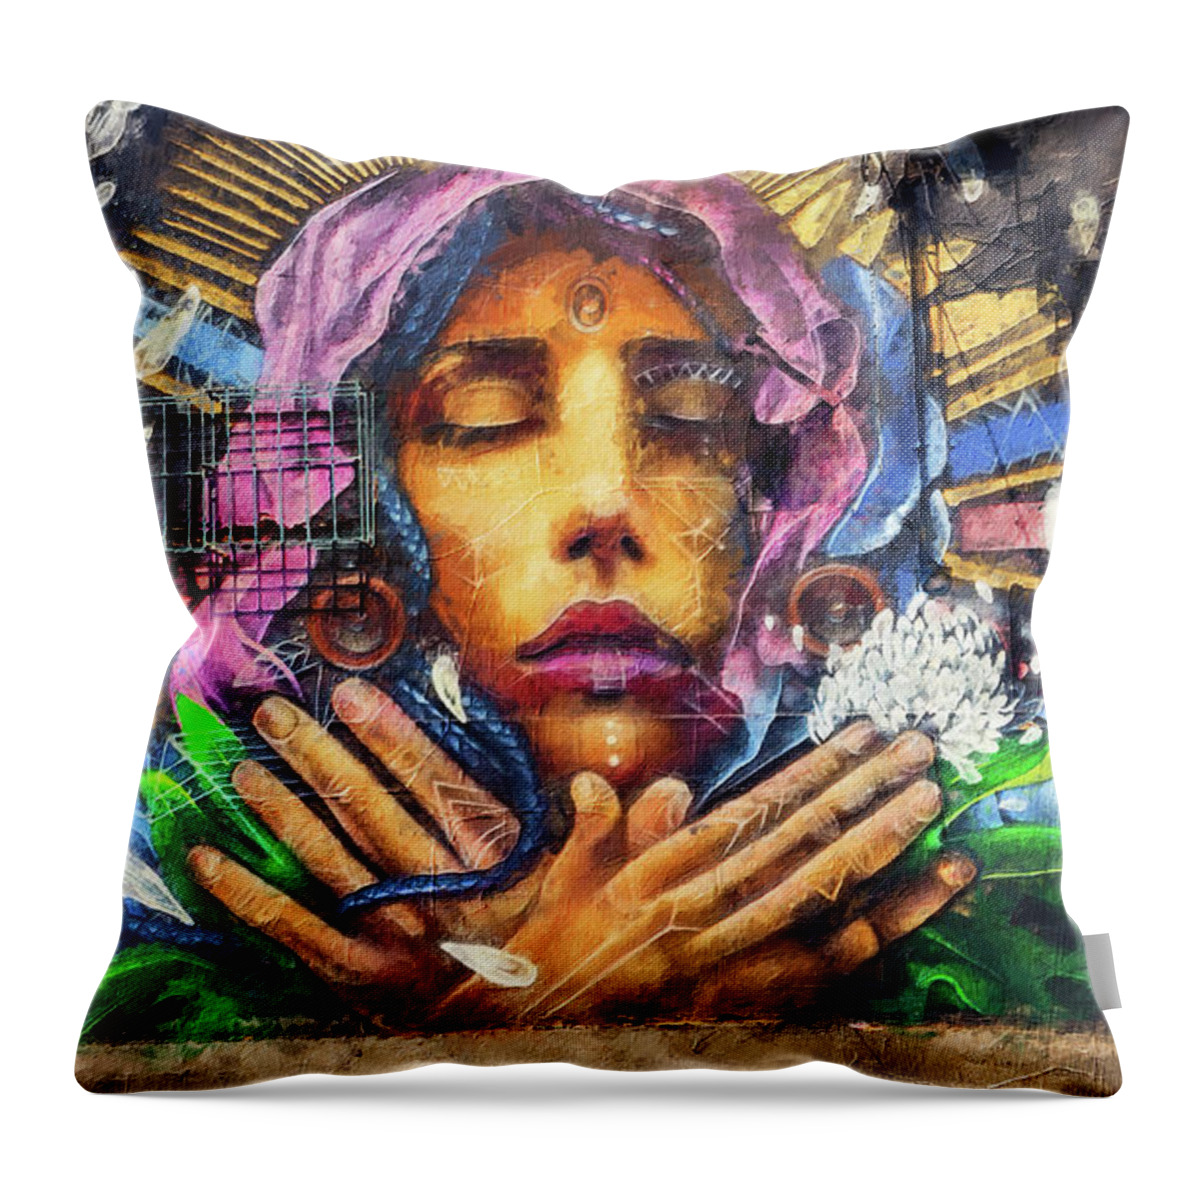 Graffiti Throw Pillow featuring the photograph Miami Wynwood Artwork 02 by Carlos Diaz